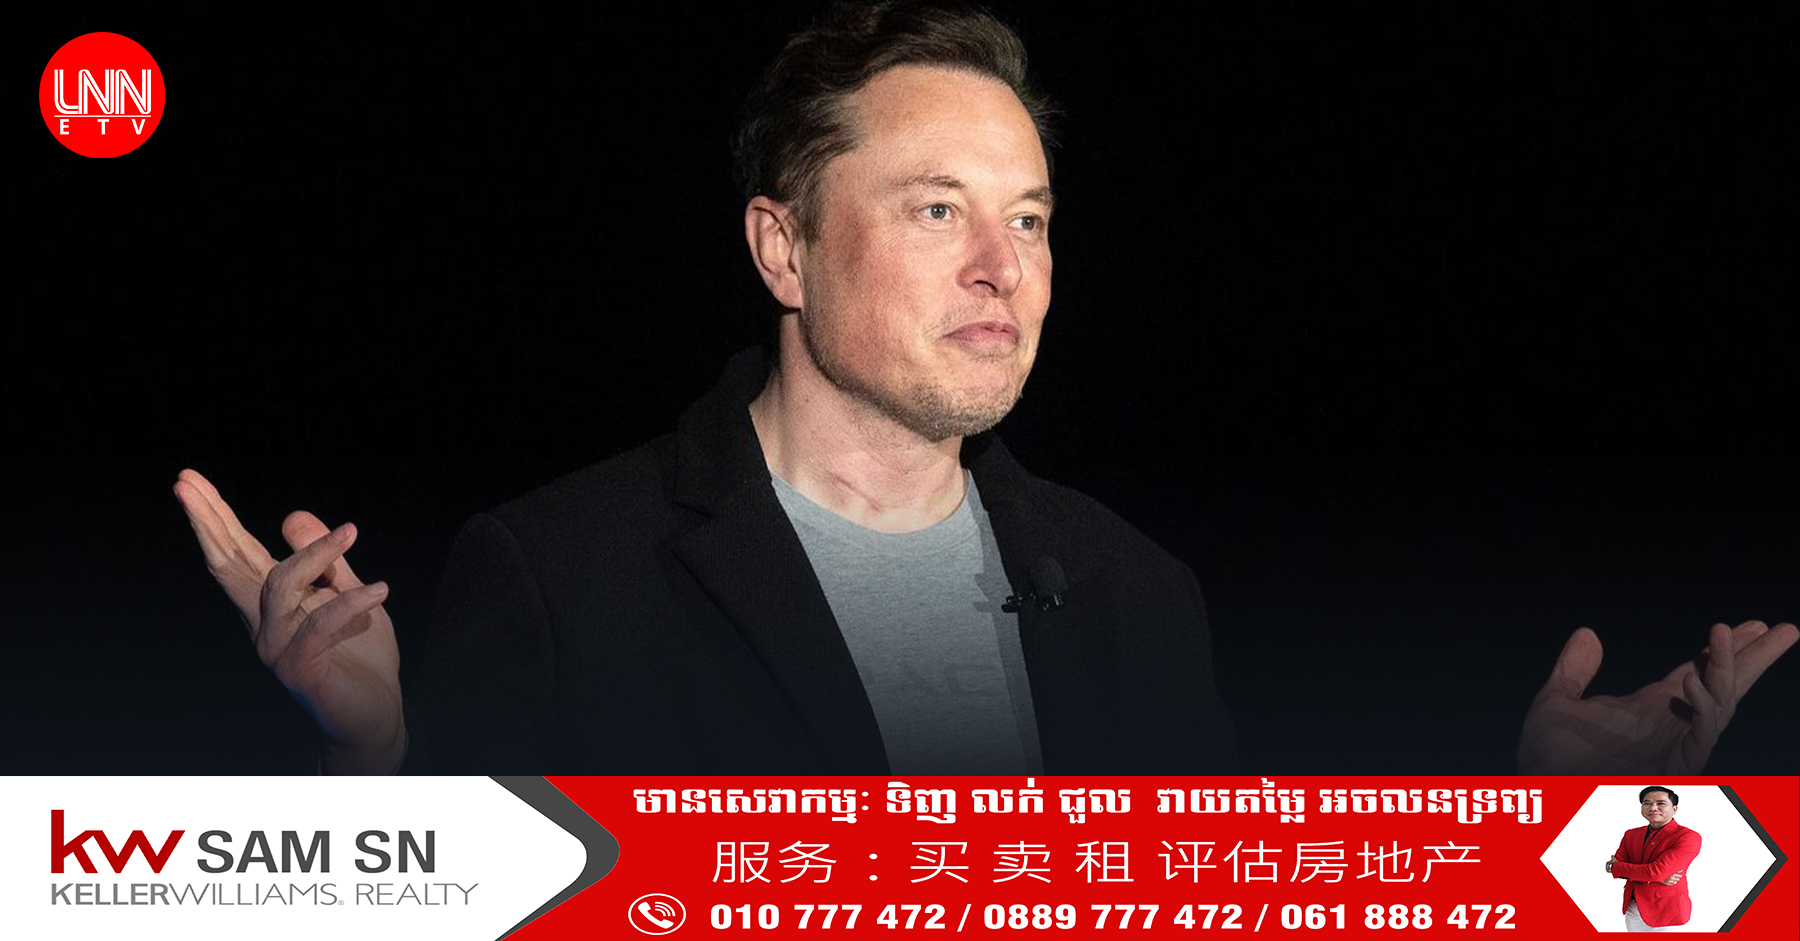 Elon Musk៖ វិបត្តិសេដ្ឋកិច្ចអាចបន្តរហូតដល់ឆ្នាំ ២០២៤ បន្ទាប់ពីមានការព្រួយបារម្មណ៍ពីតម្រូវការនៅក្នុងប្រទេសចិន និងអឺរ៉ុប់